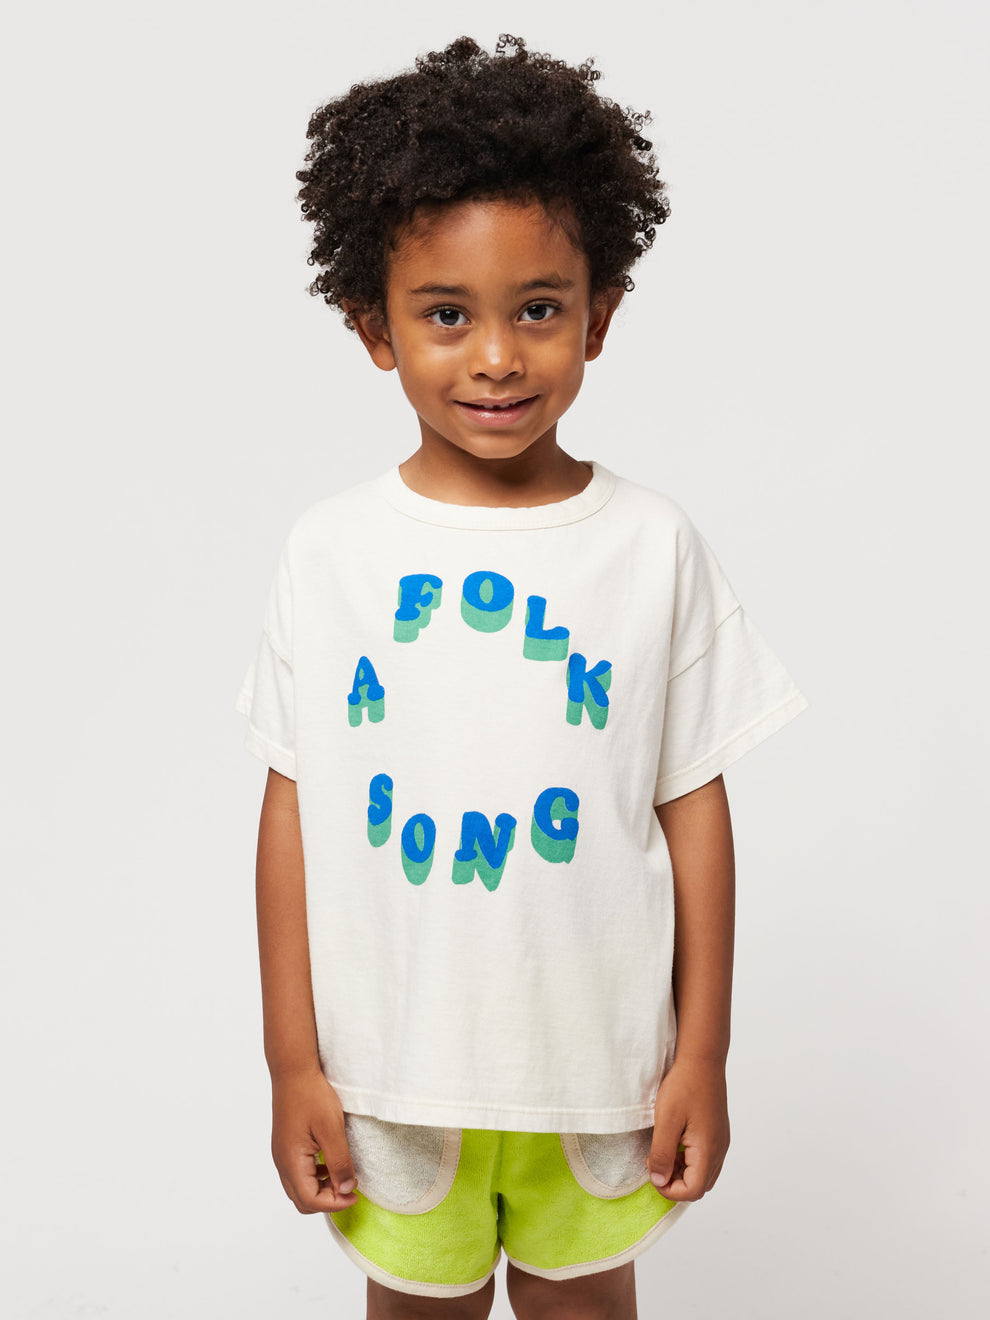 Bobo Choses A Folk Song T-shirt